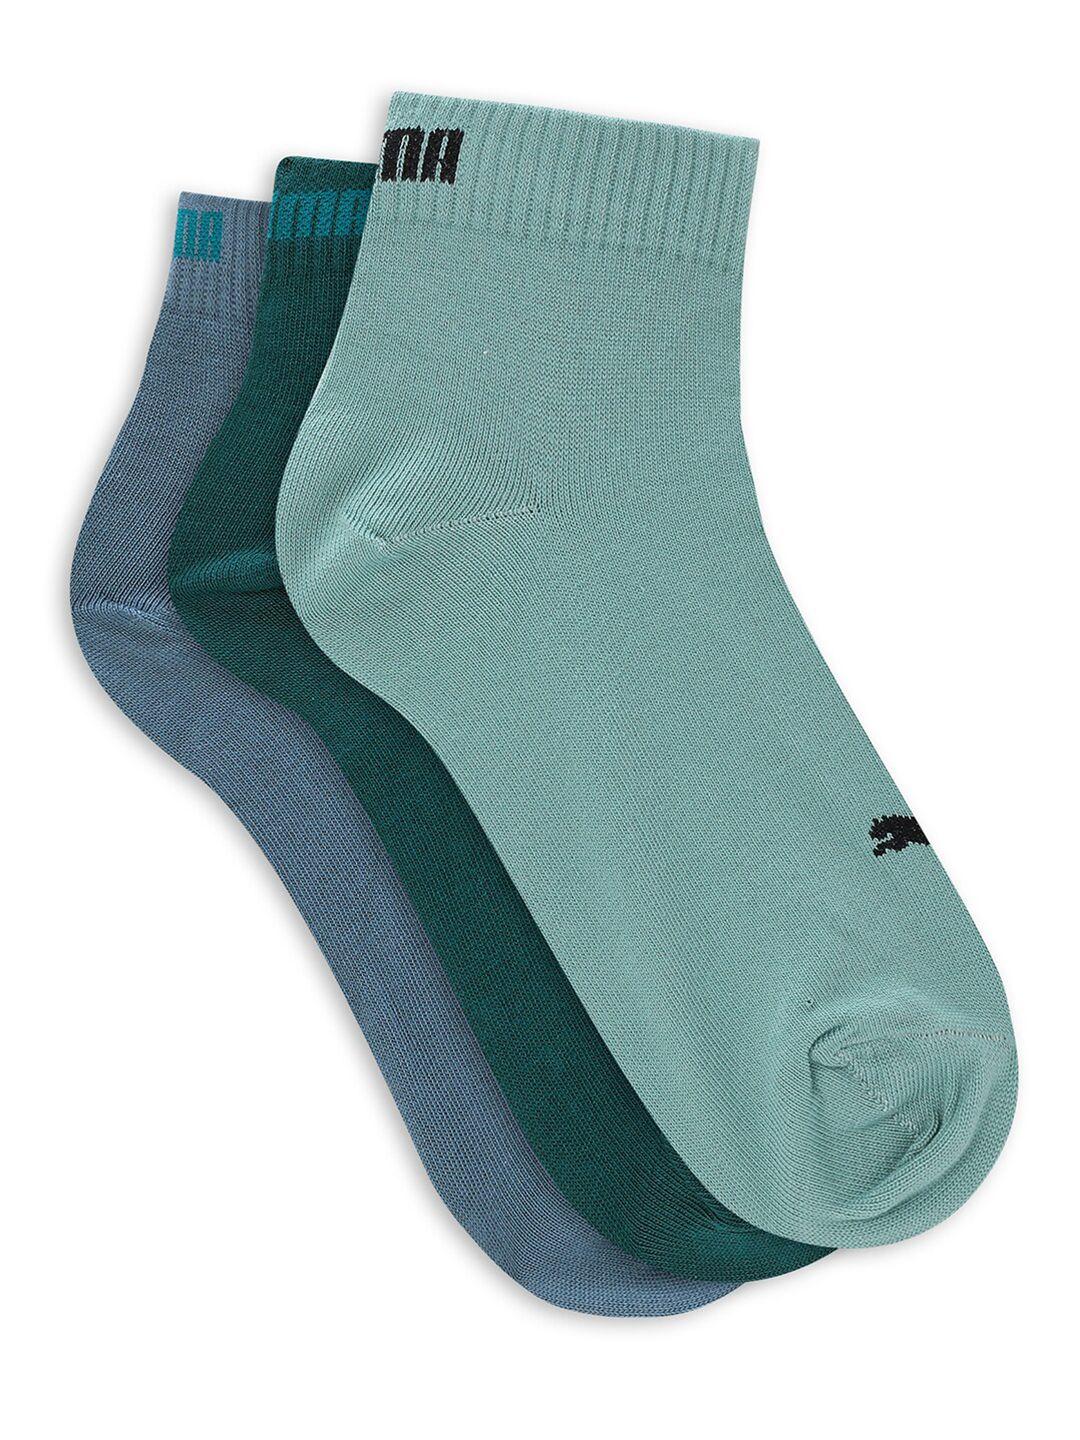 puma quarter plain unisex pack of 3 ankle length cotton socks